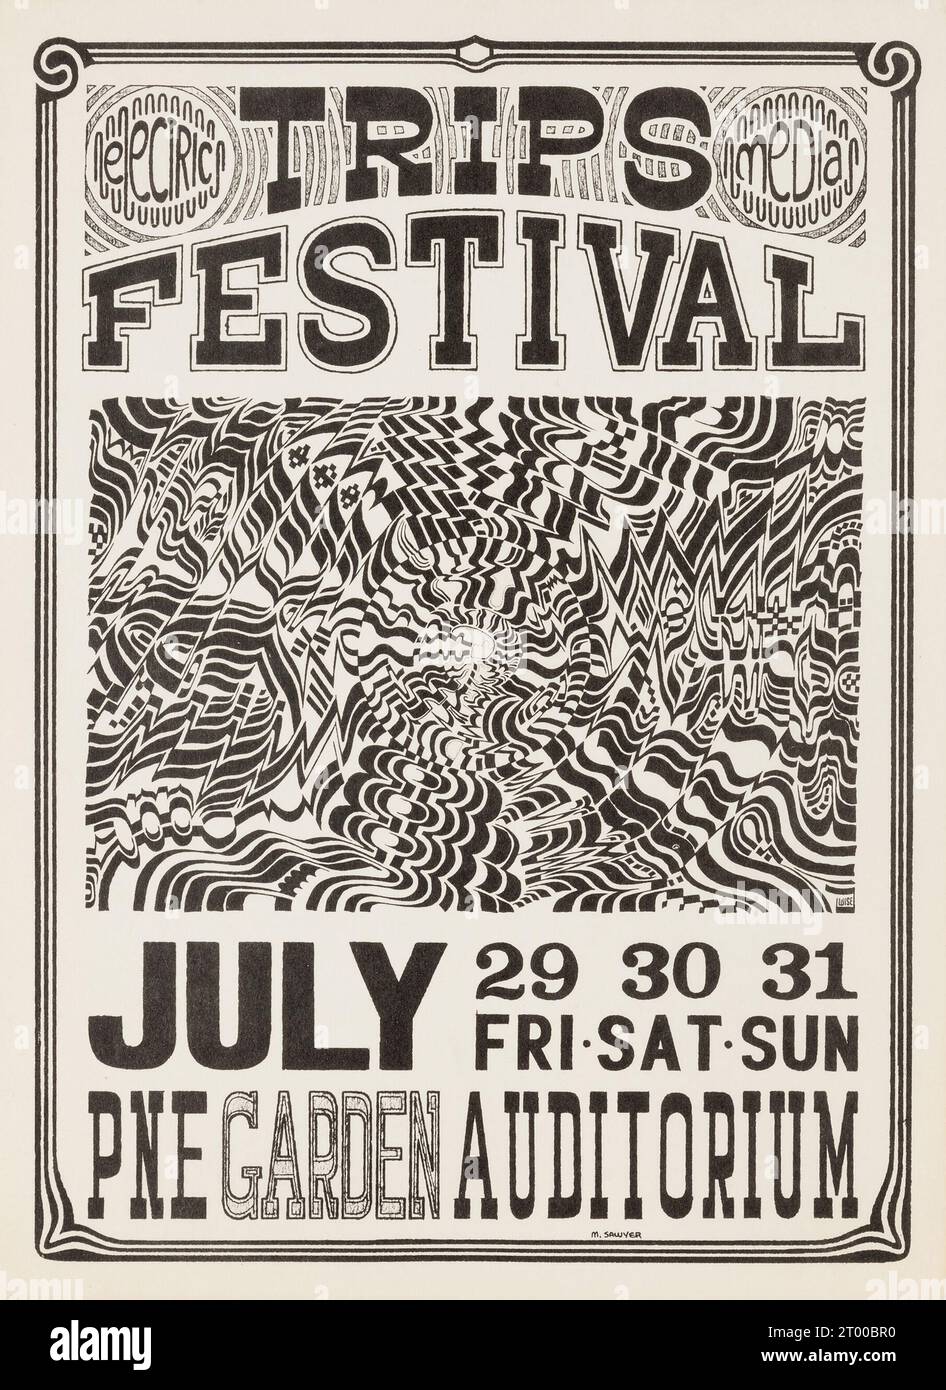 Grateful Dead, Janis Joplin, July 29-31, 1966 - Trips Festival Vancouver, PNE Garden Auditorium Stock Photo